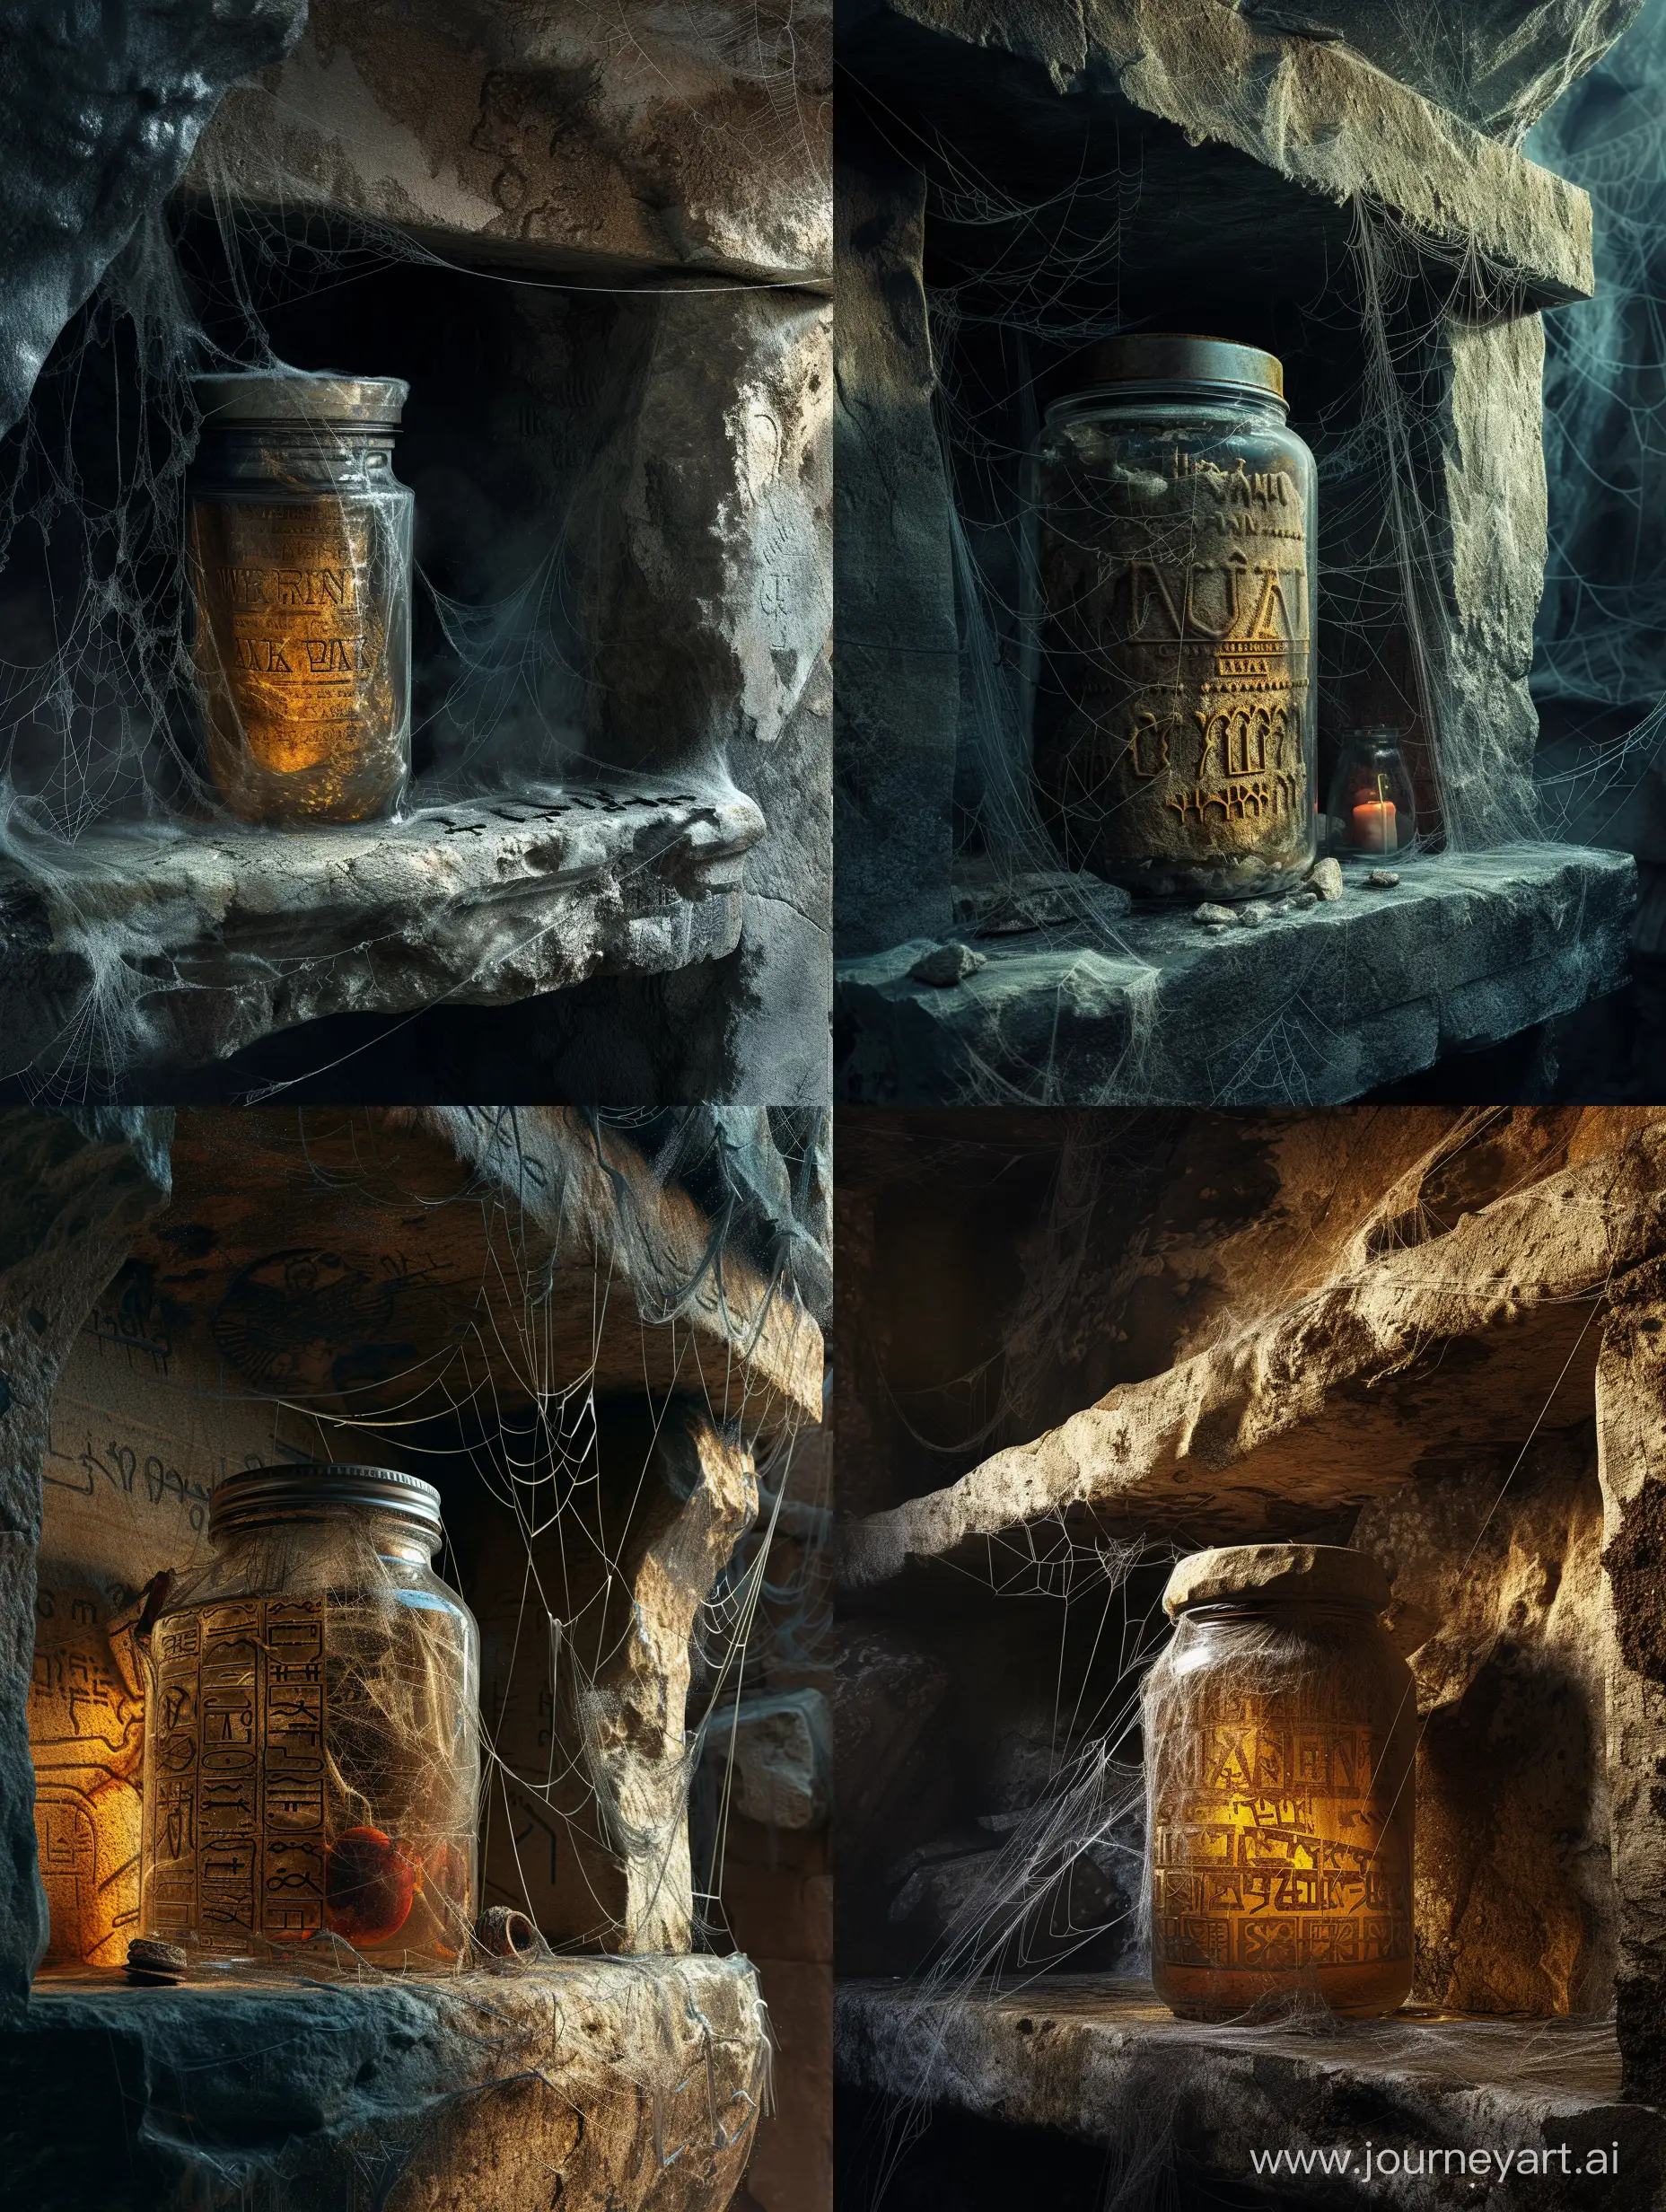 Ancient dark World in alcohol inside a jar,on ancient stone shelf,cobwebs everywhere,runic script,incredible detail,terrifying,Digital Art.